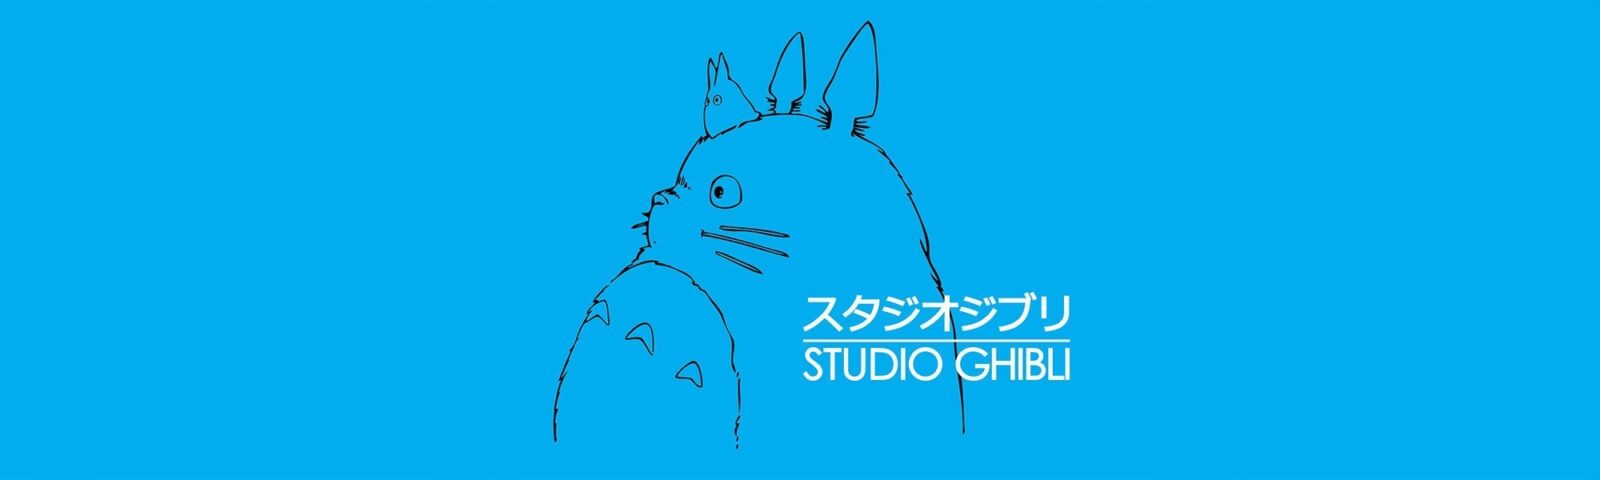 Studio Ghibli : Goro Miyazaki va réaliser un troisième film | LCDG